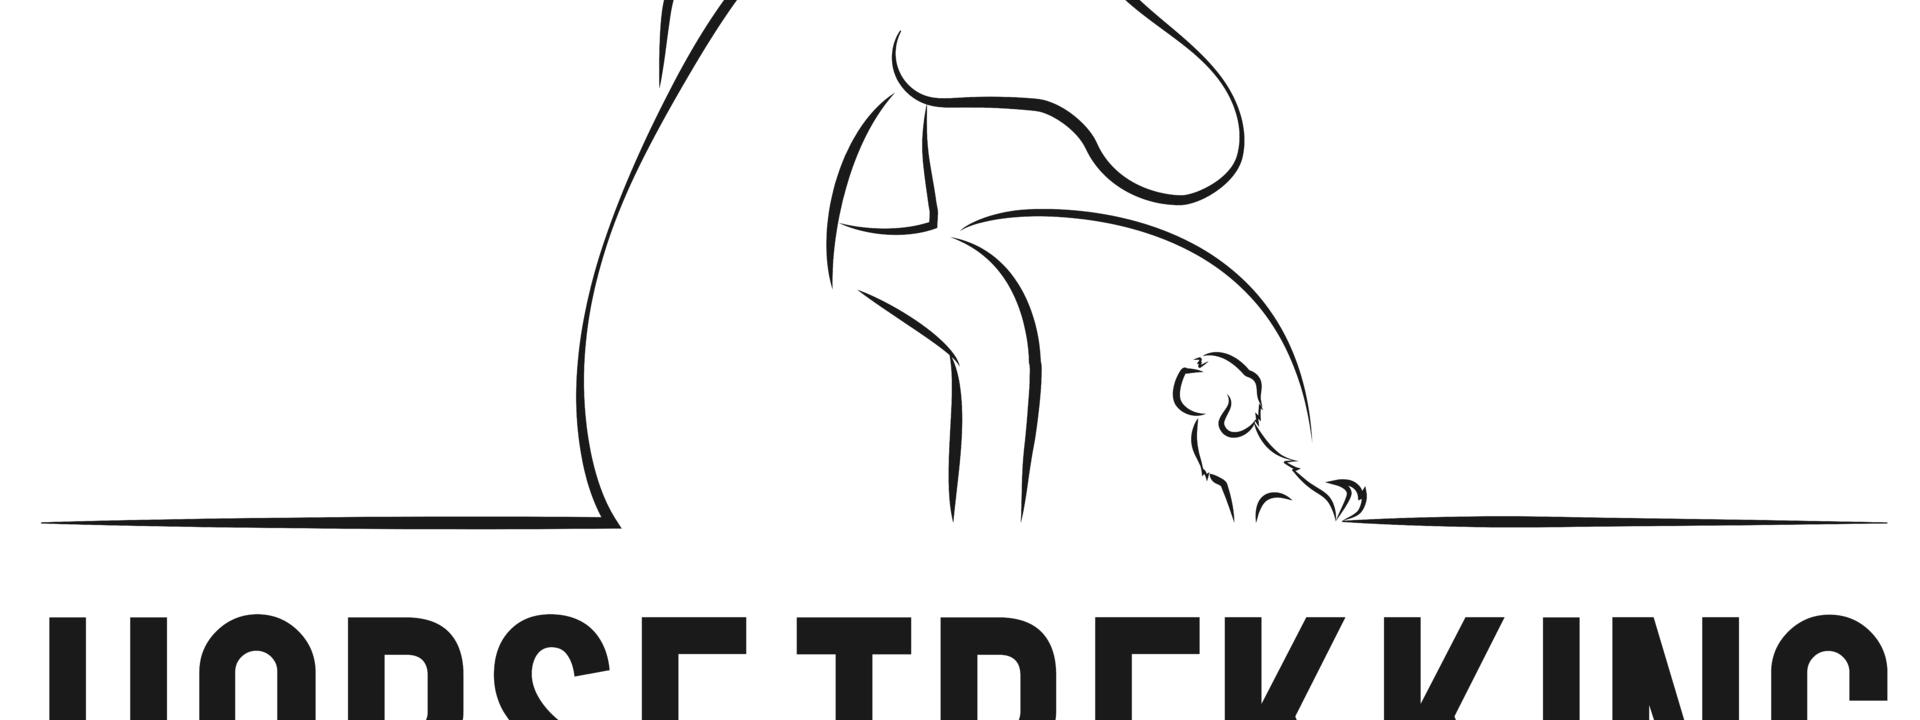 horse-trekking-lake-okareka-logo.jpg